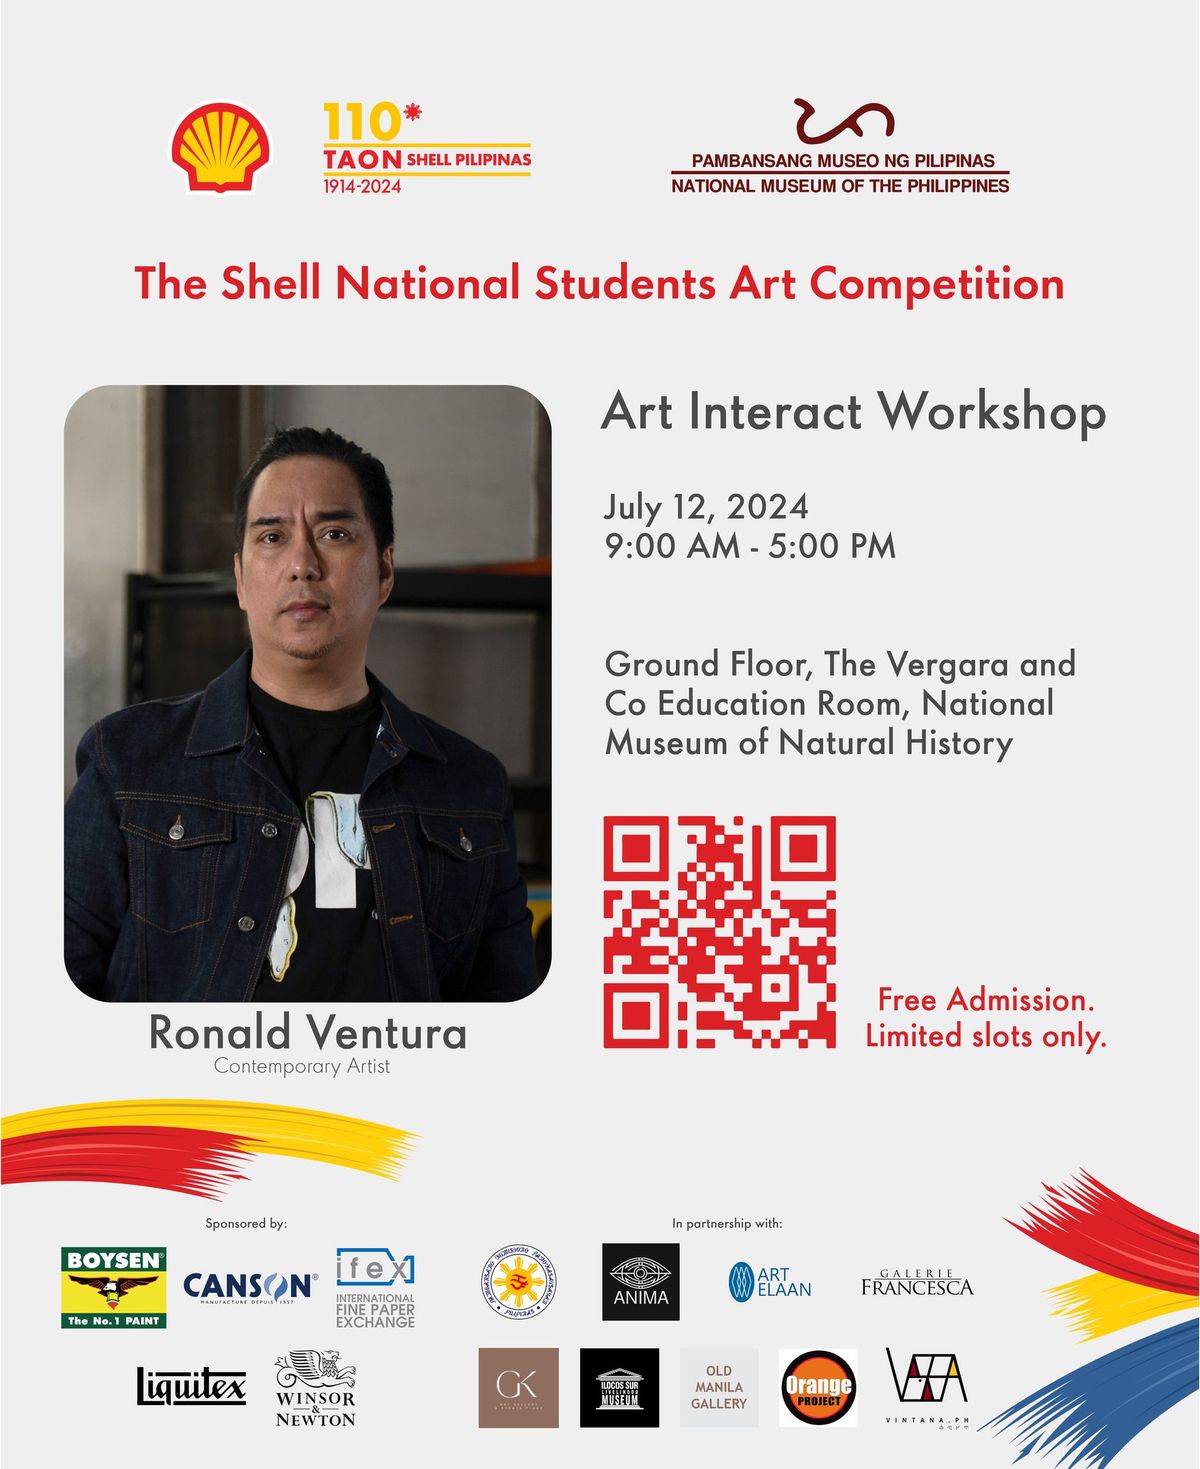 Art Interact Workshop with Ronald Ventura